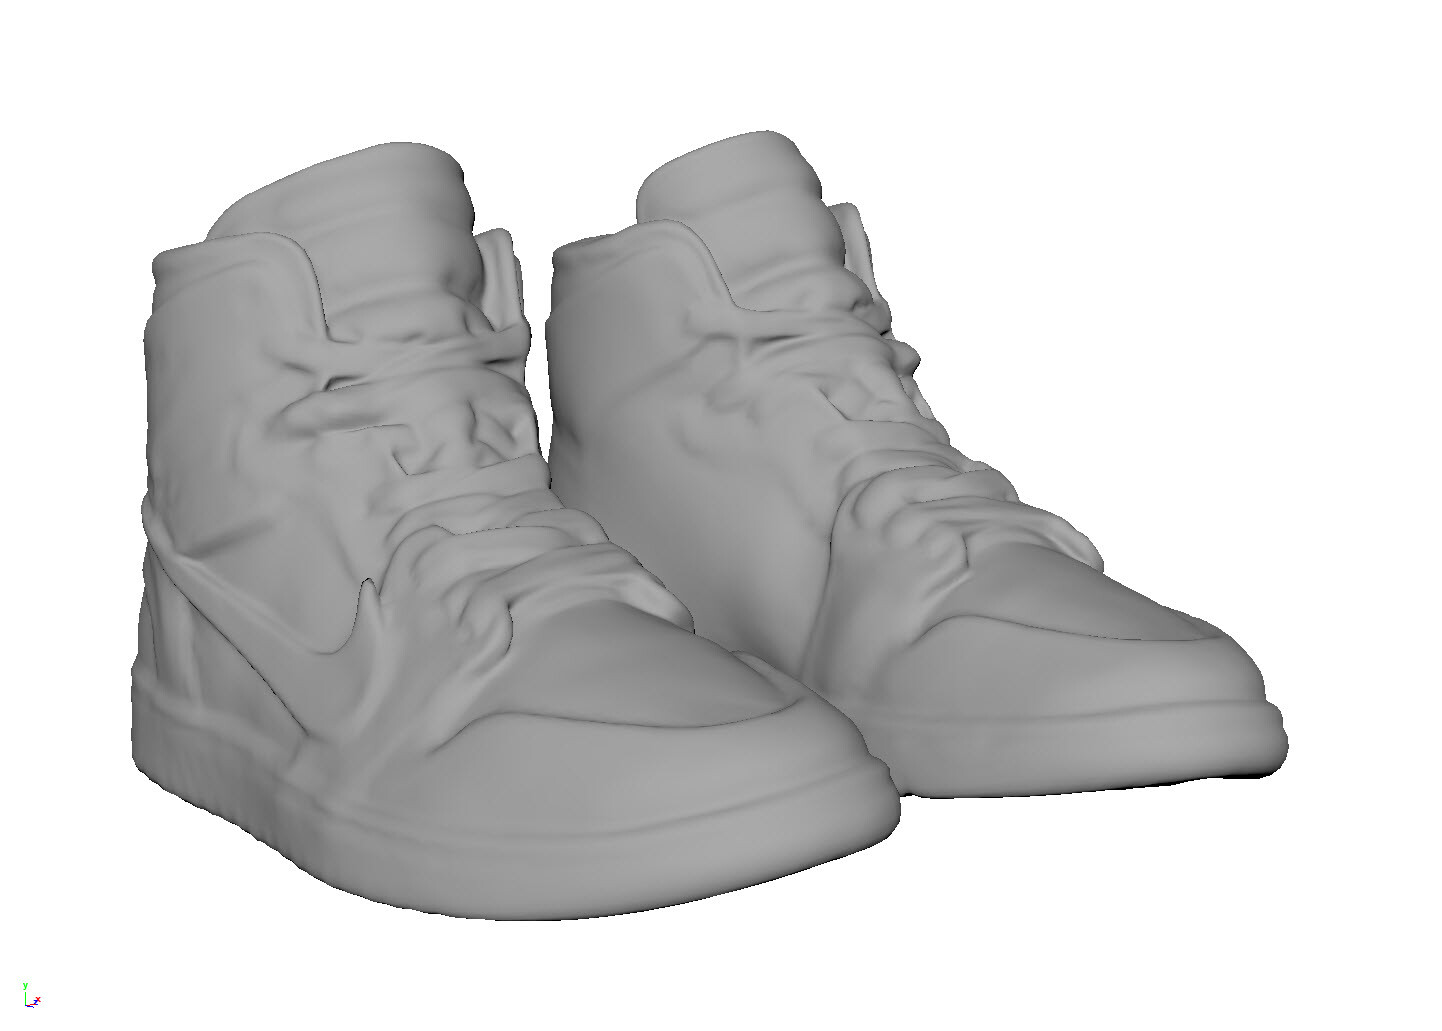 ArtStation - Nike Air Jordan 1 high x Louis vuitton footwear yeezy